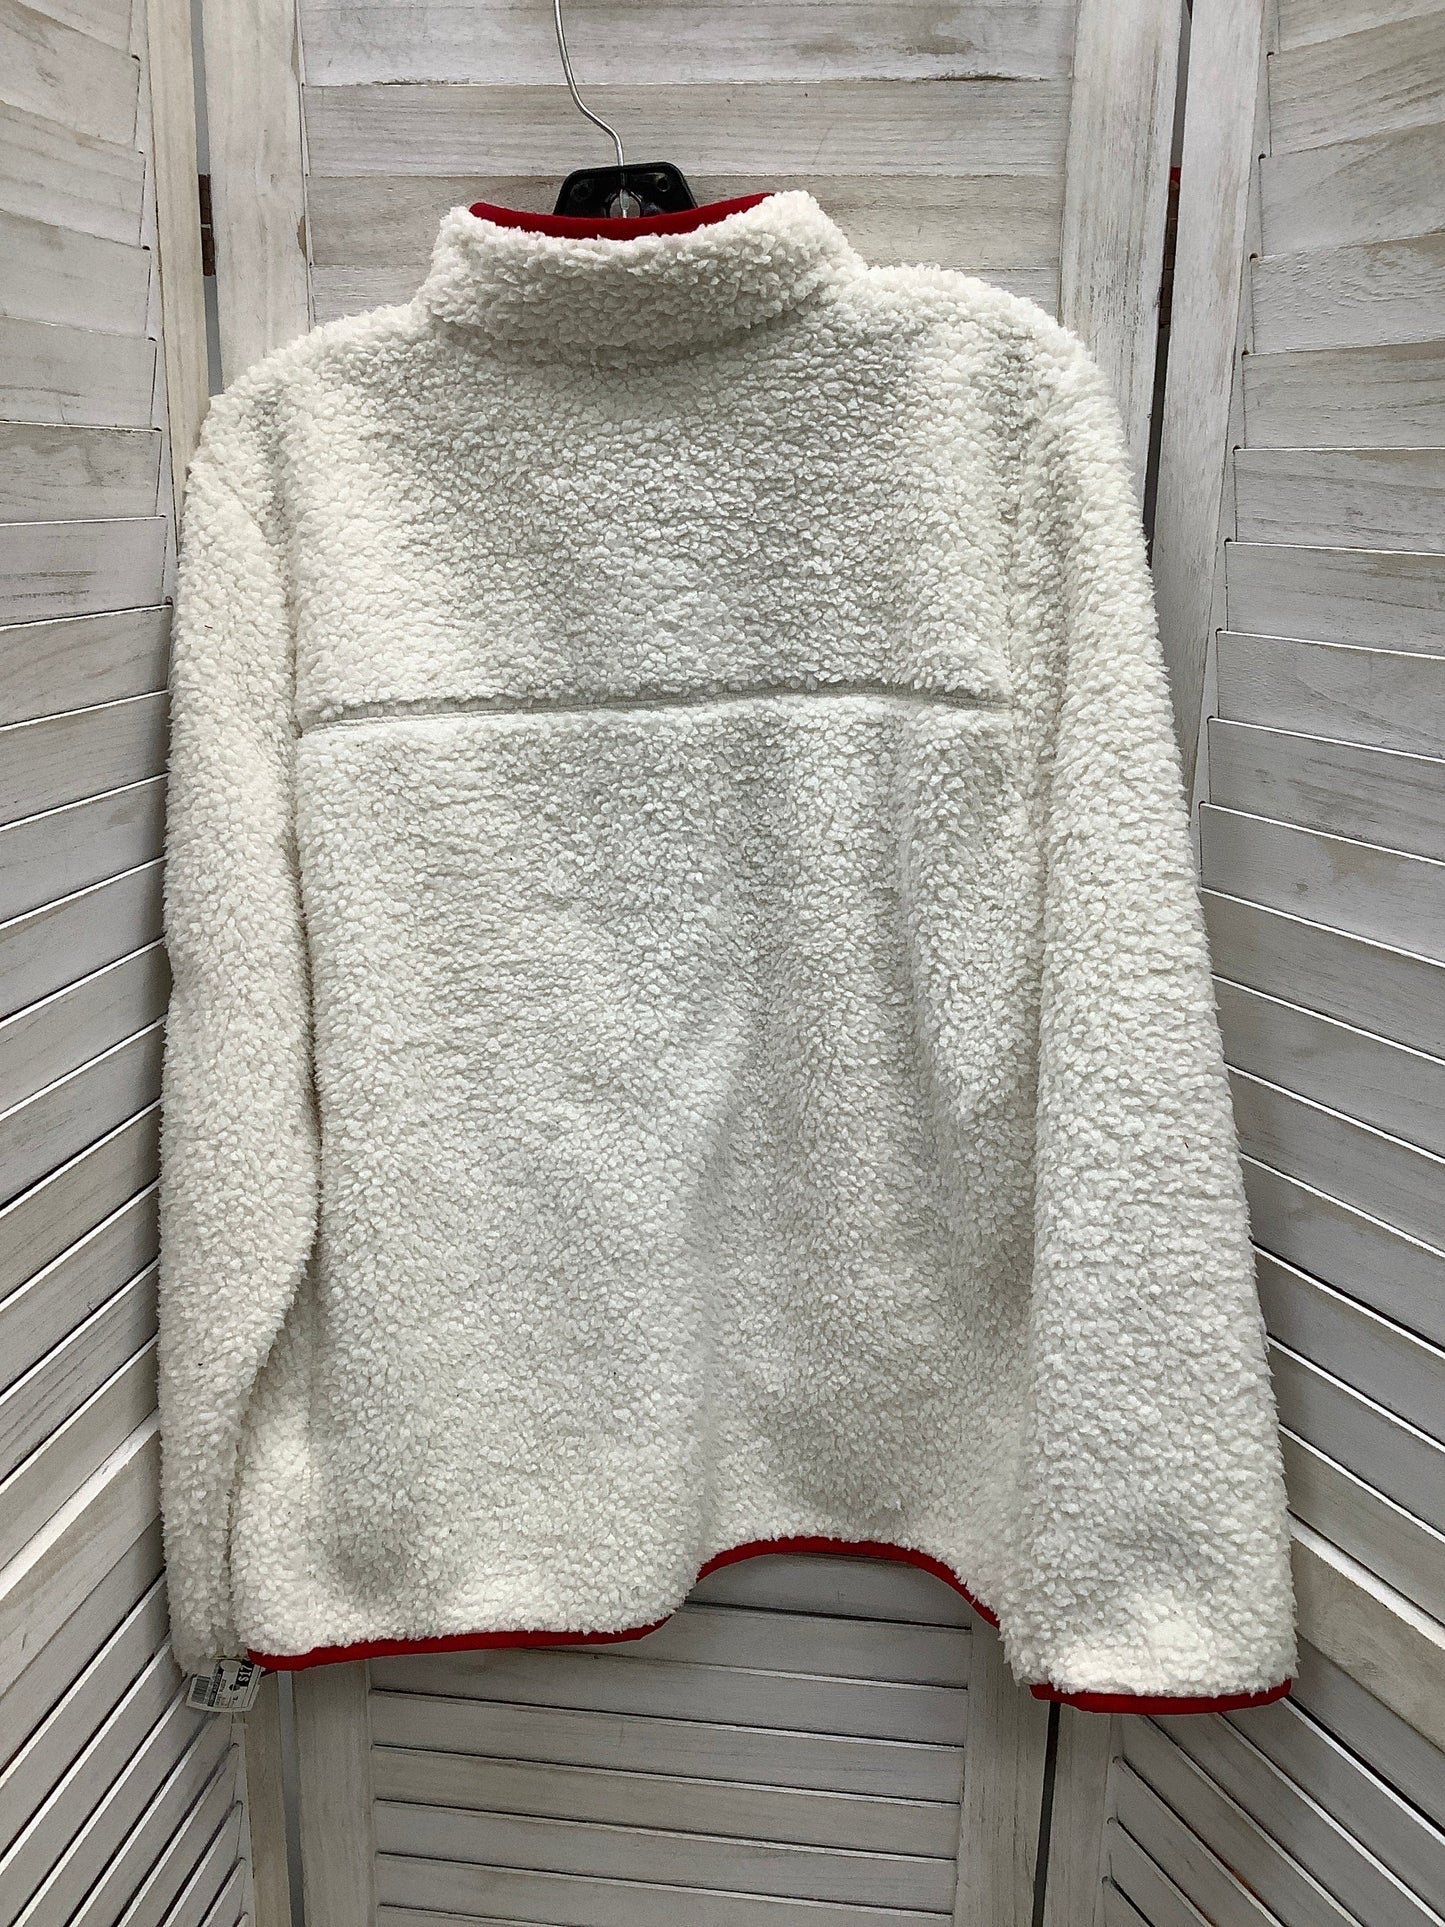 Jacket Fleece By Tommy Hilfiger  Size: Xl